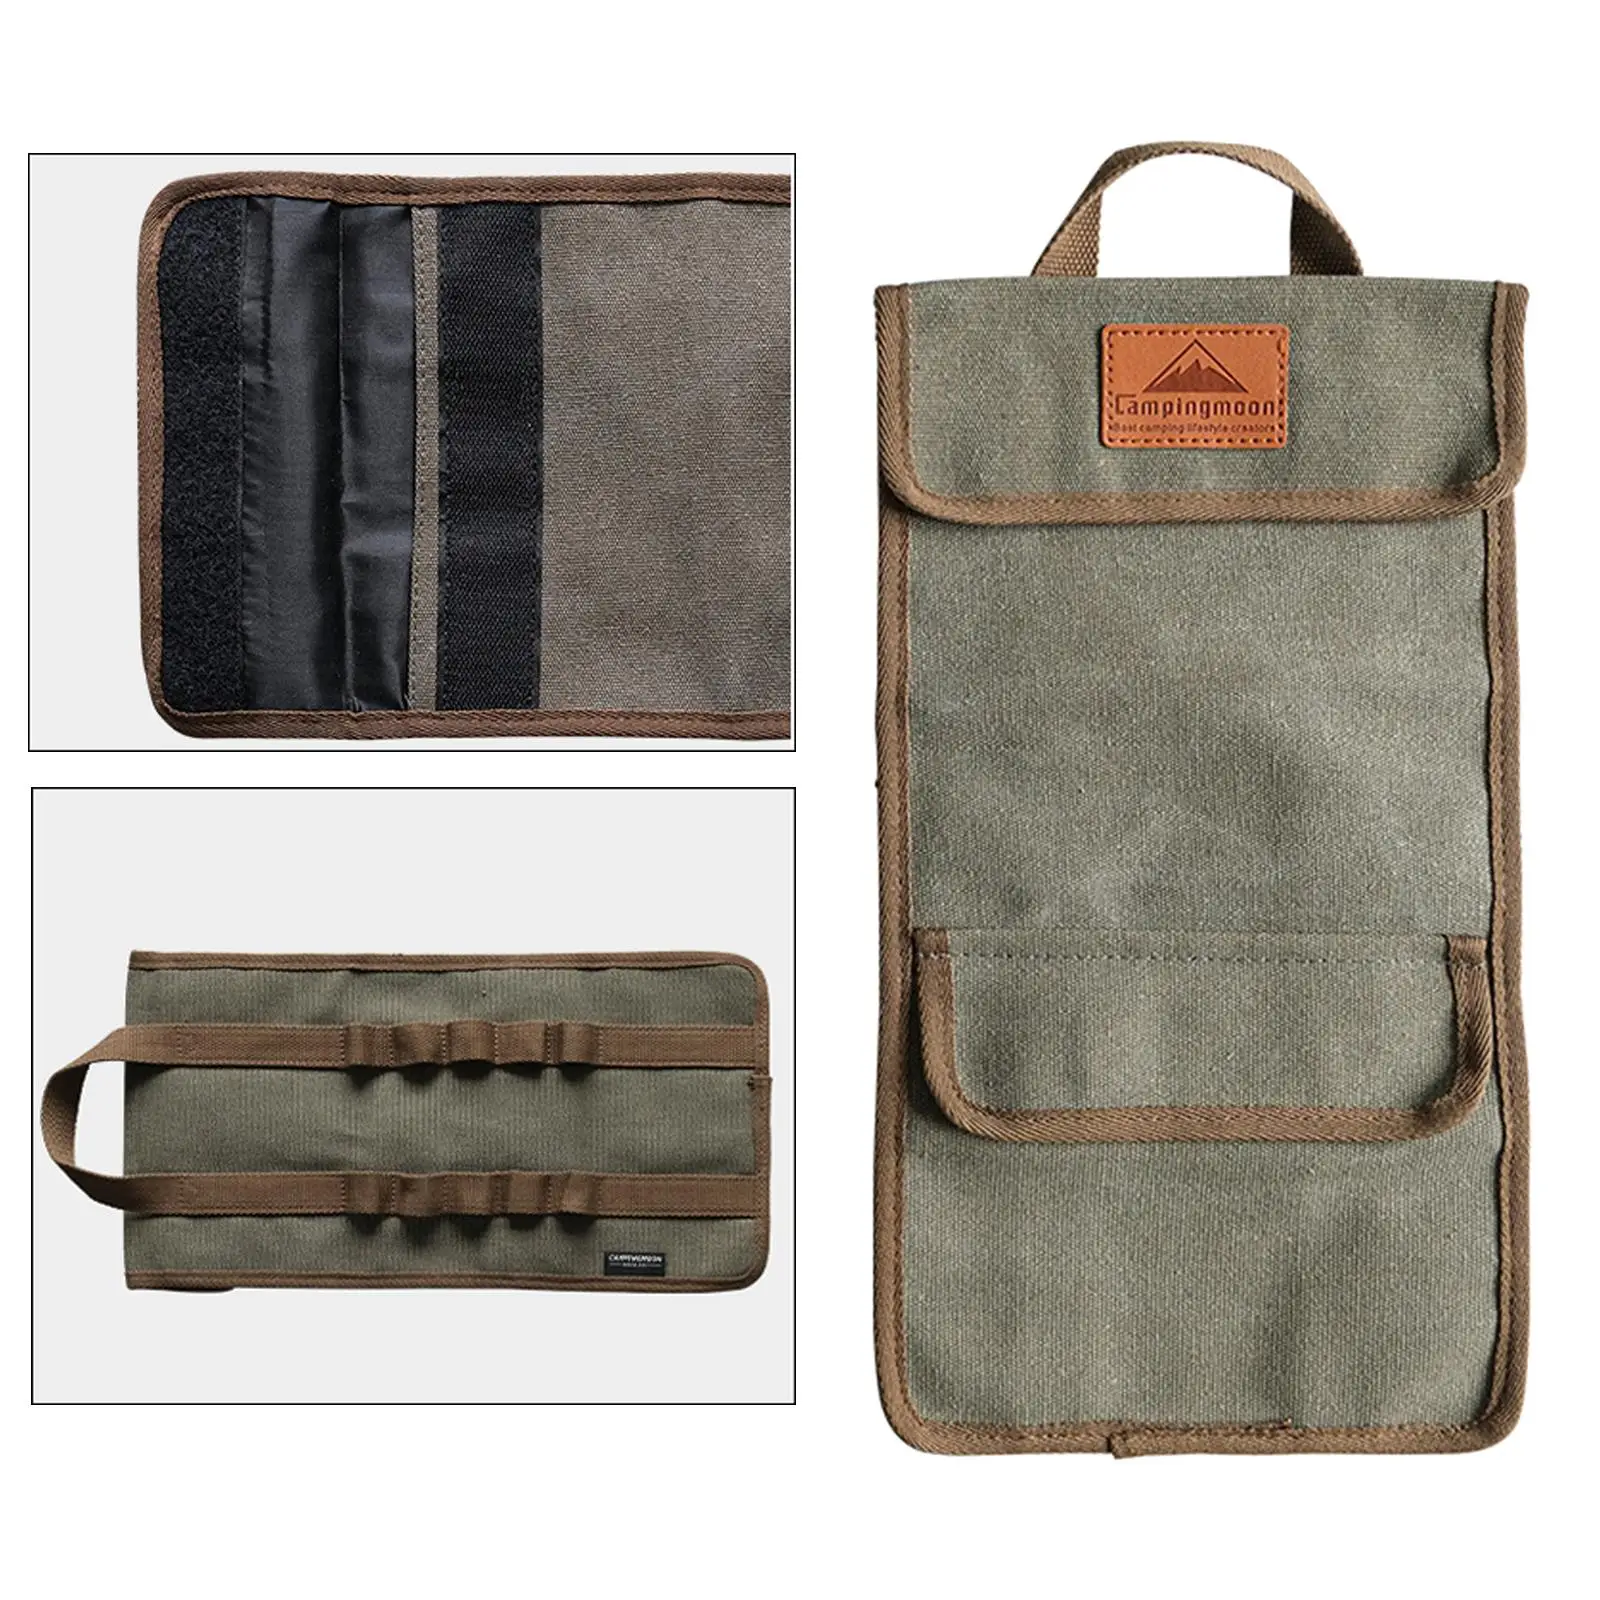 Durable Storage Carry Bag Organizer Handbag for Traveling Shop Camping